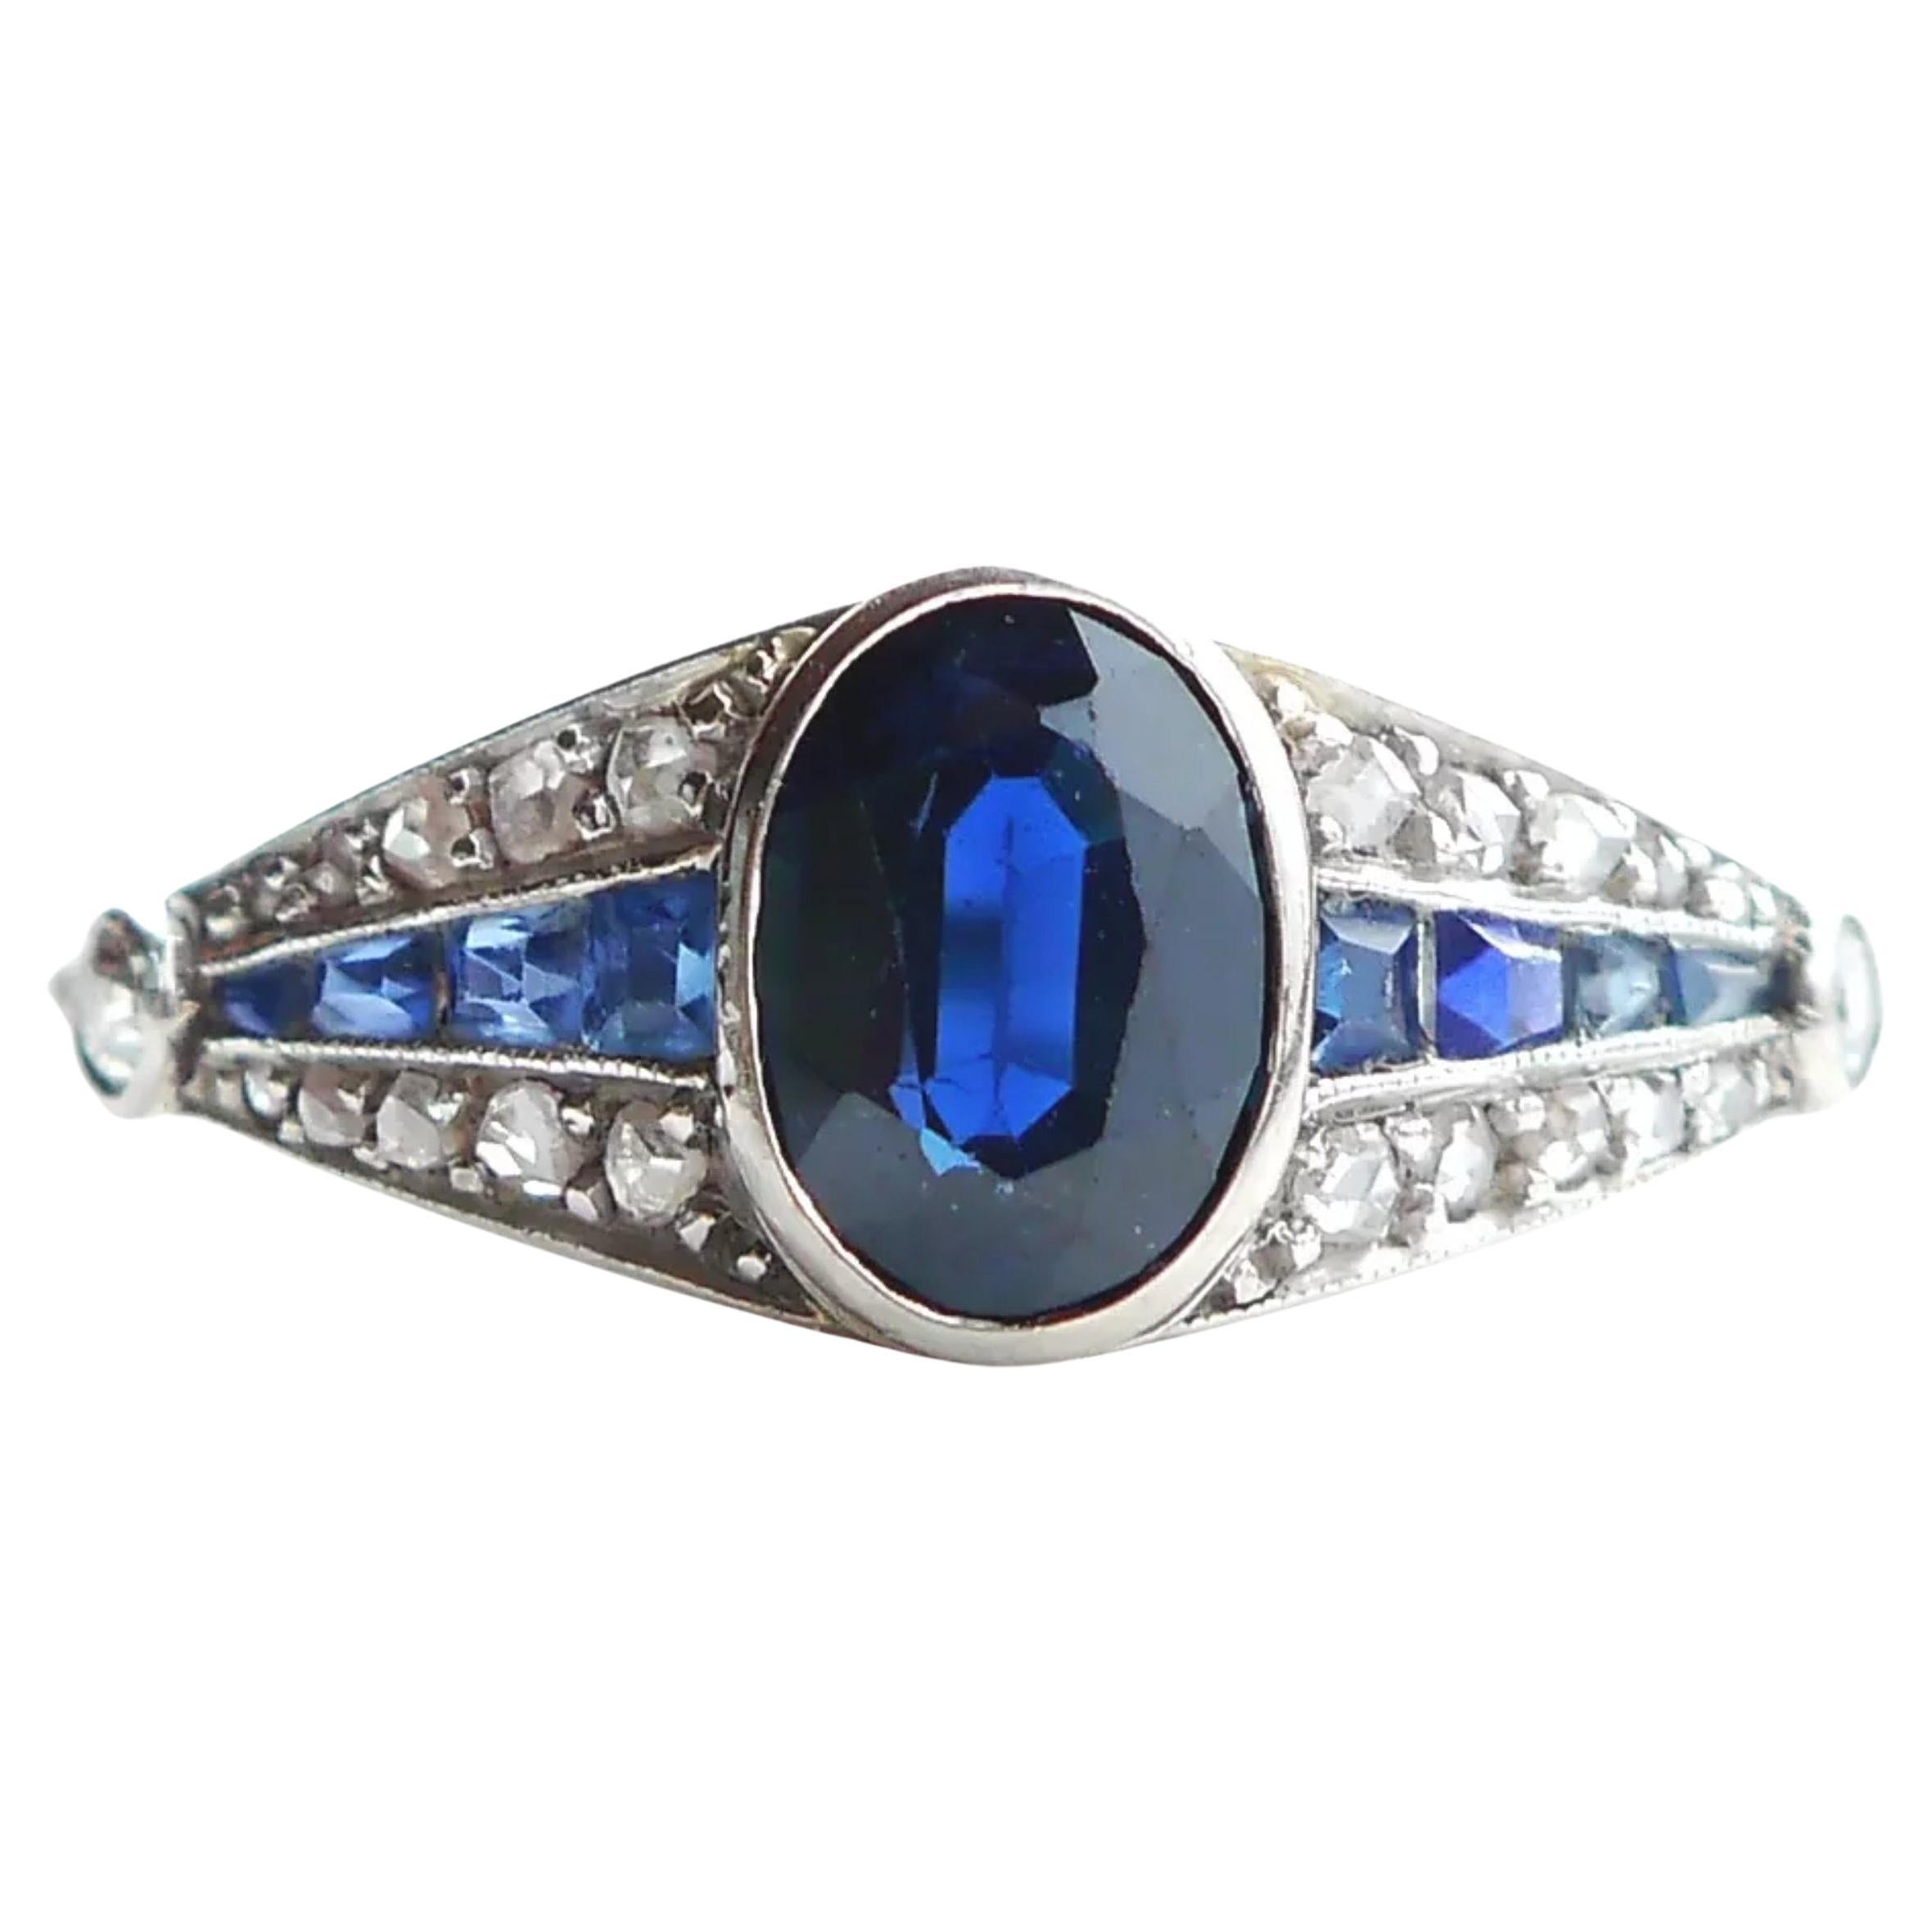 For Sale:  3 Carat Oval Cut Sapphire Engagement Ring Unique Diamond Half Eternity Band